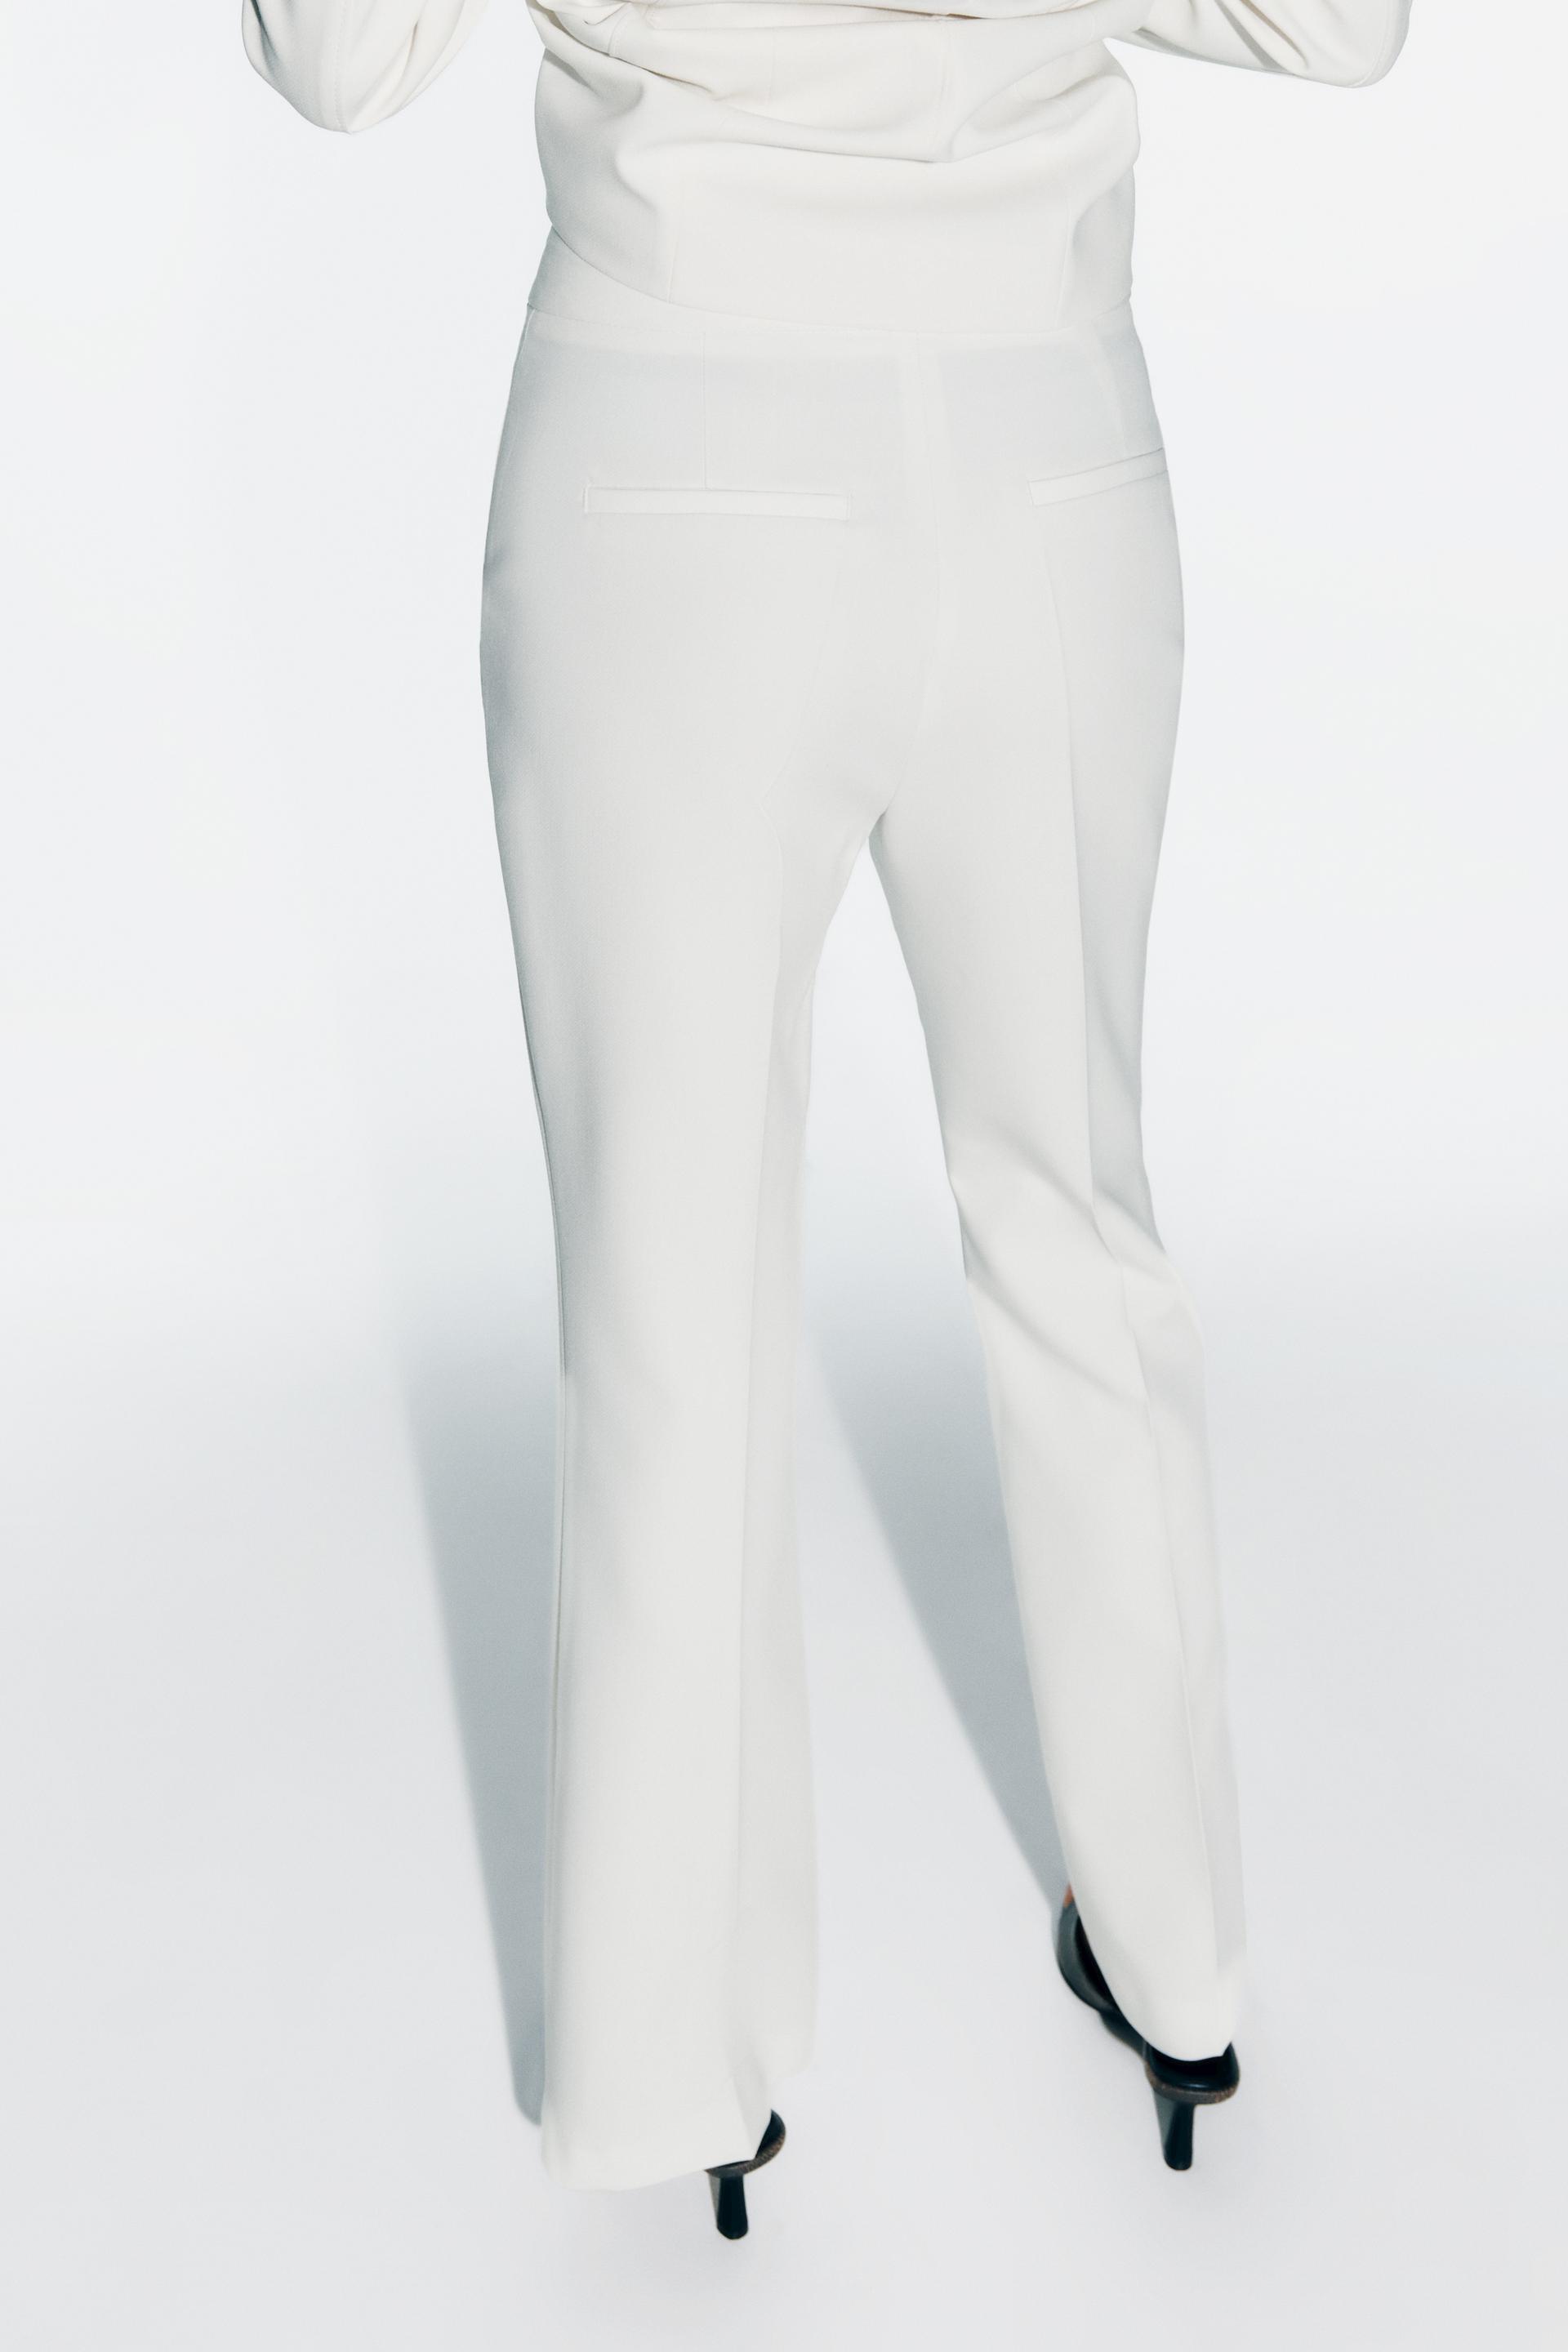 ZARA Highwaist Trousers Off-white, Women's Fashion, Bottoms, Other